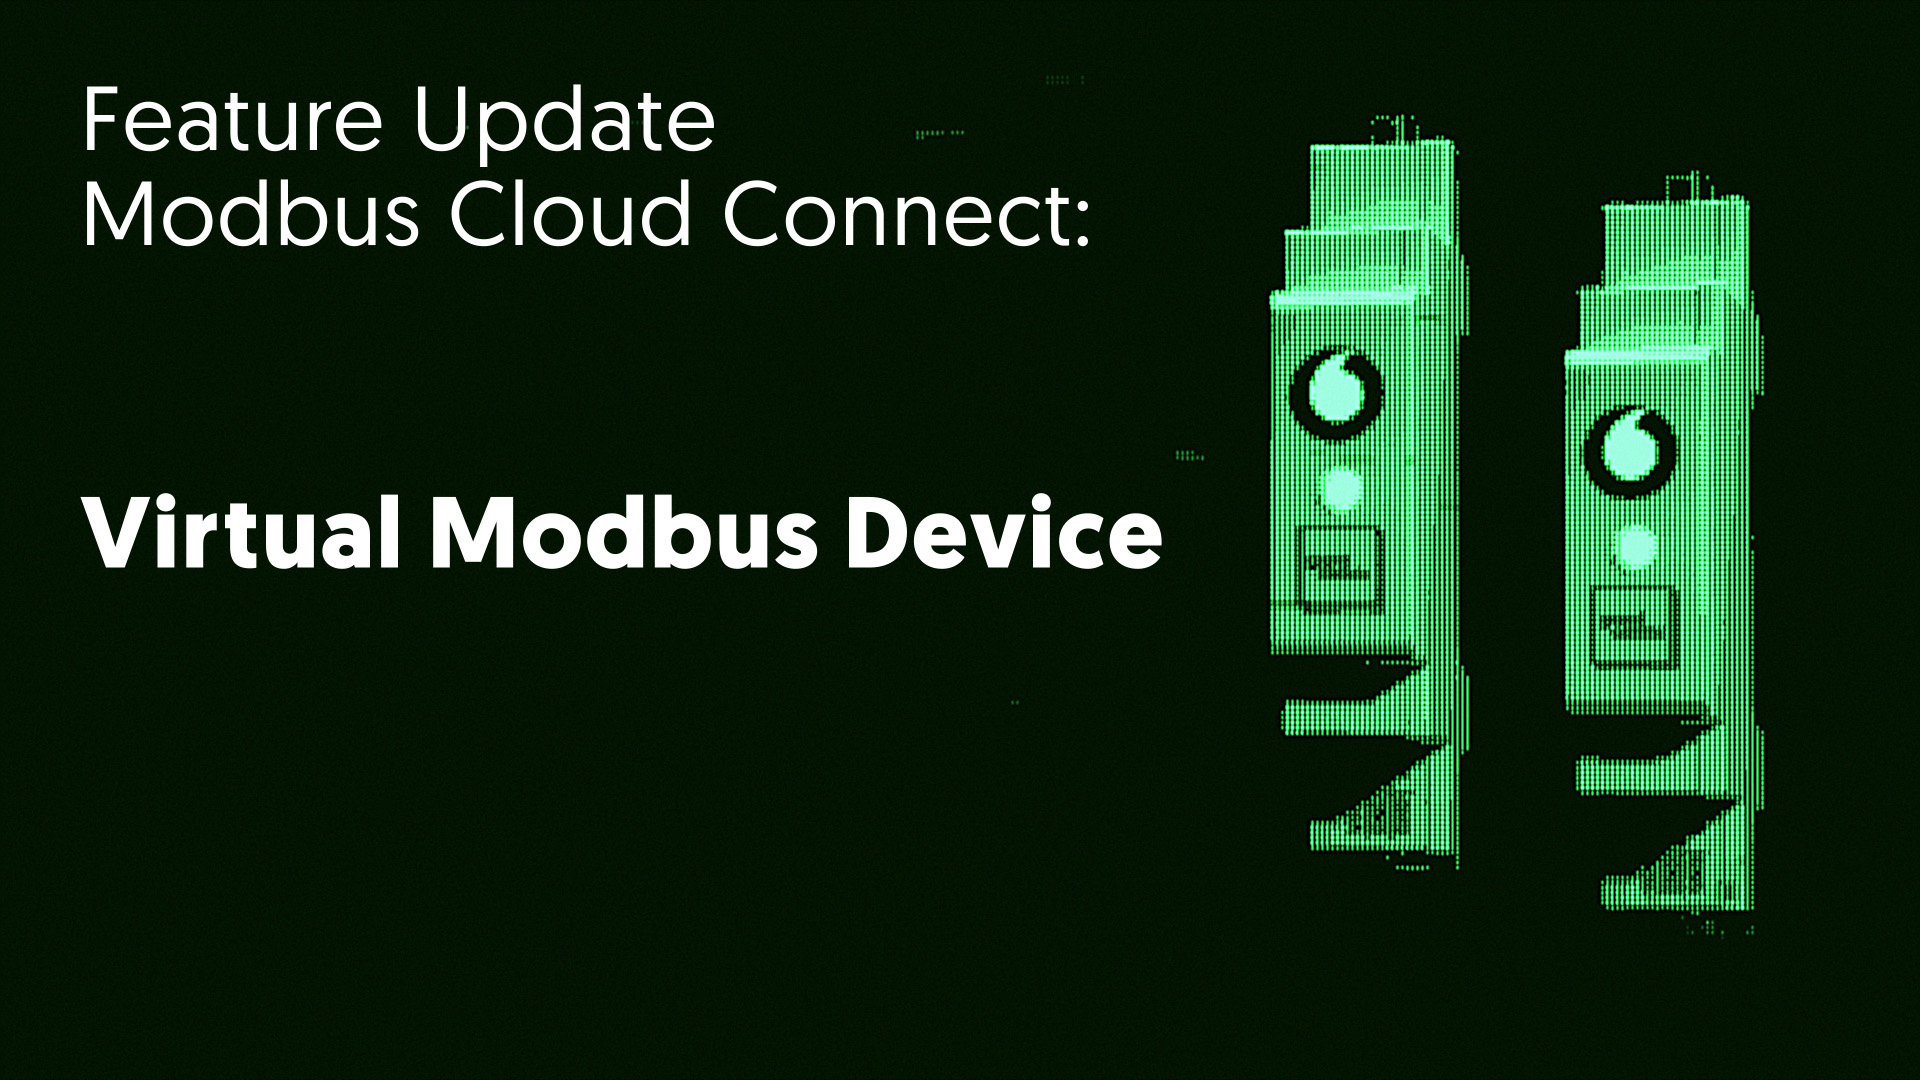 Modbus Cloud Connect – Feature Update